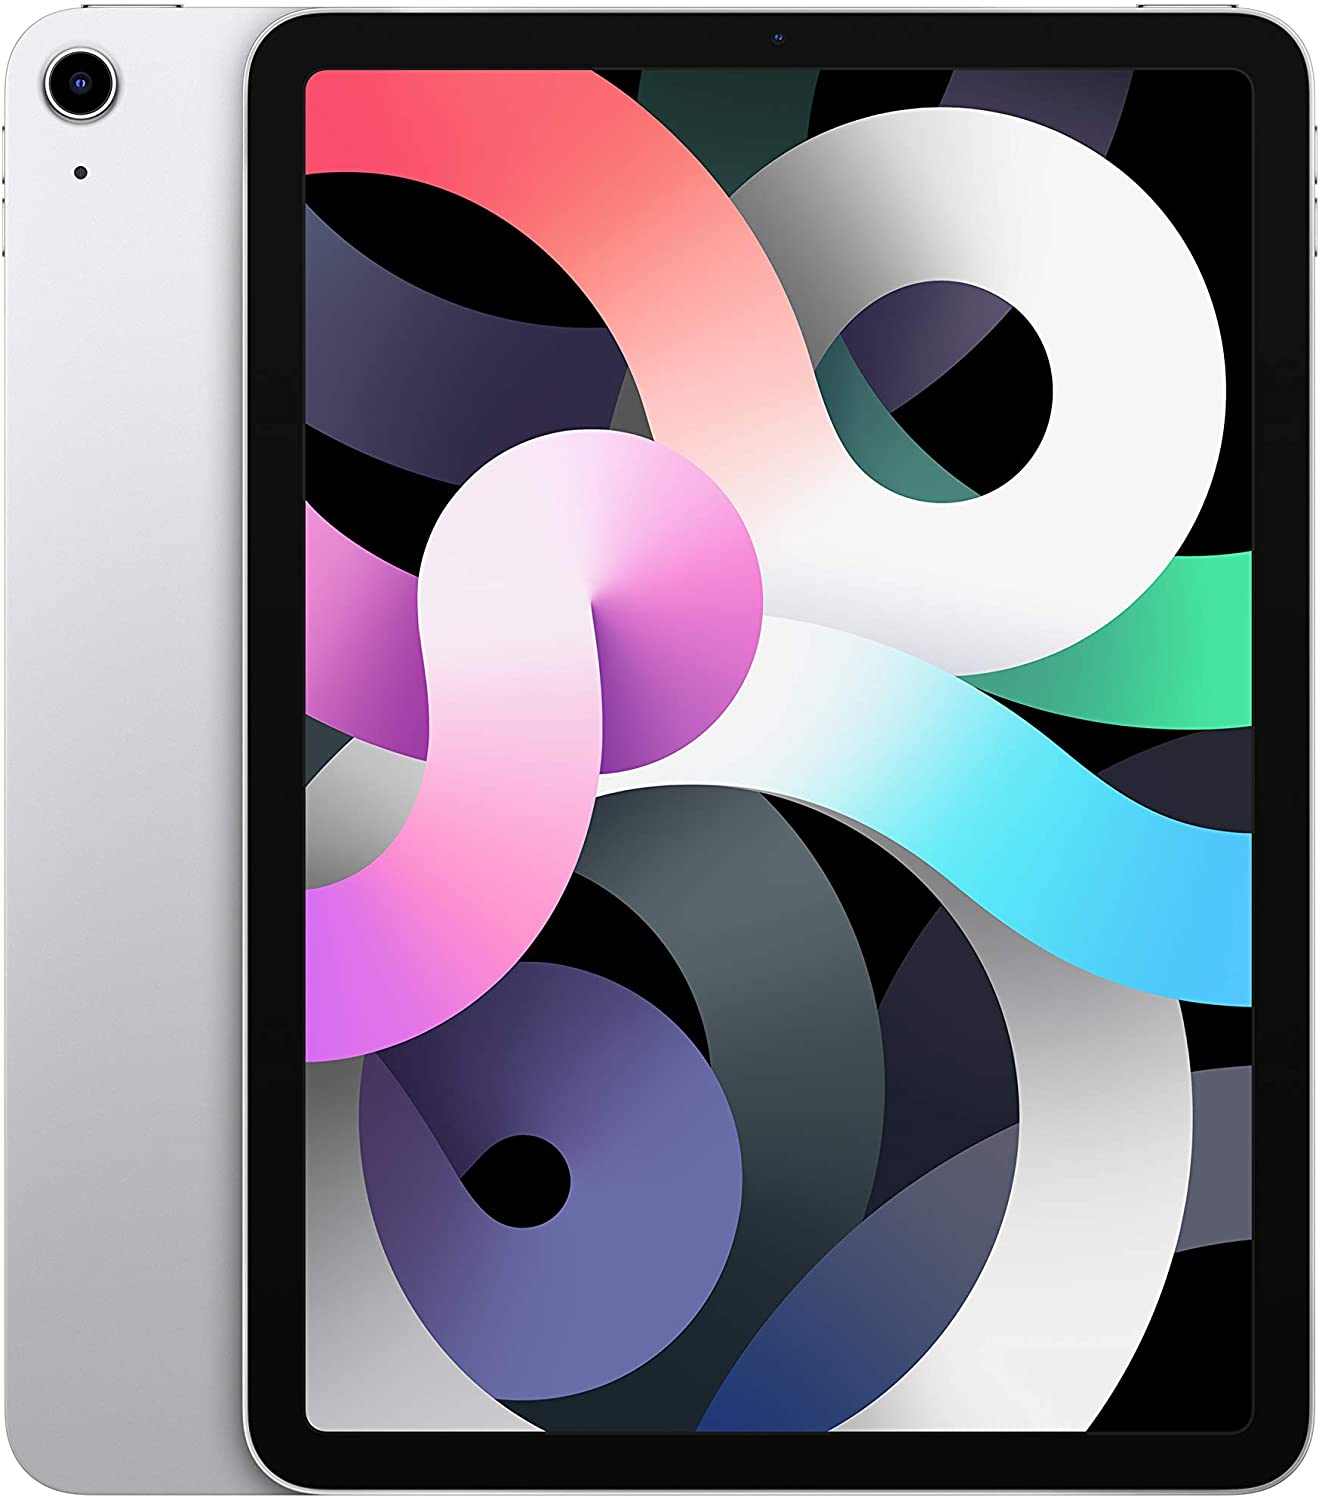 256GB Apple iPad Air (2020 4th Gen) $599 + free s/h at Amazon